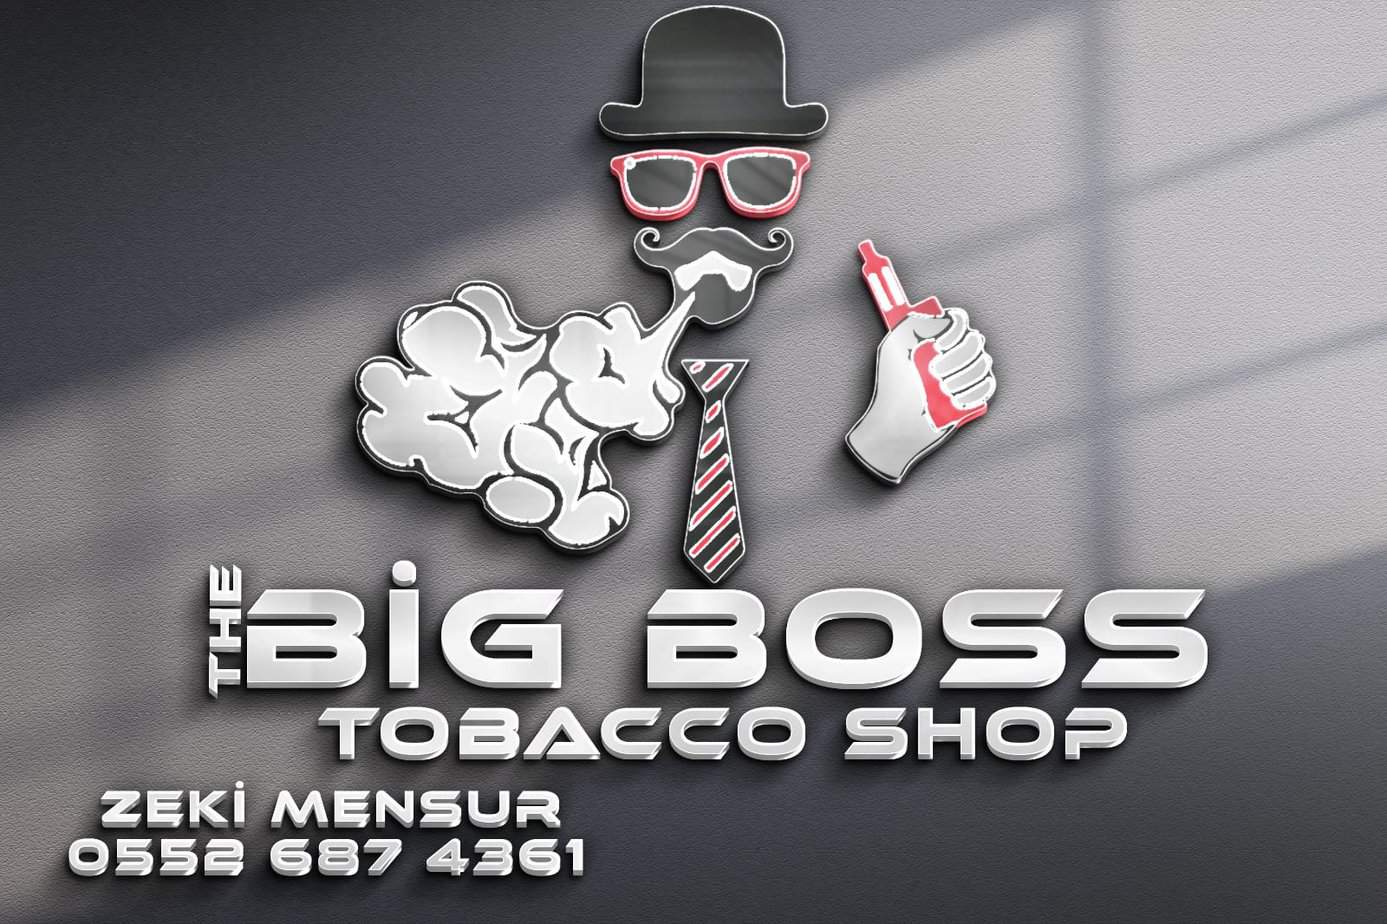 The Big Boss Tobacco Shop Center